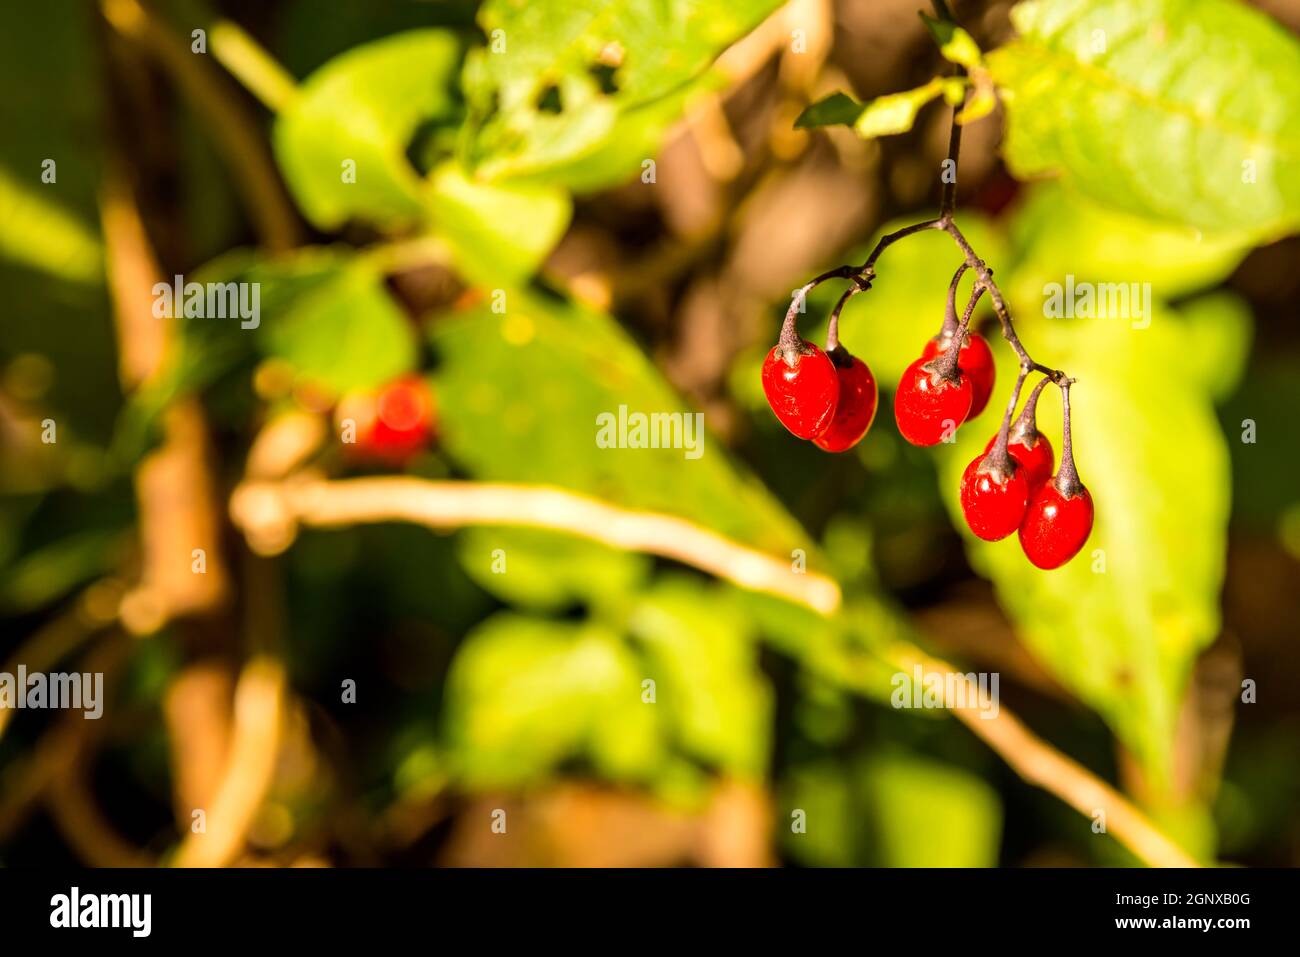 Solanum dulcamara, medicinal plant with ripe berries Stock Photo